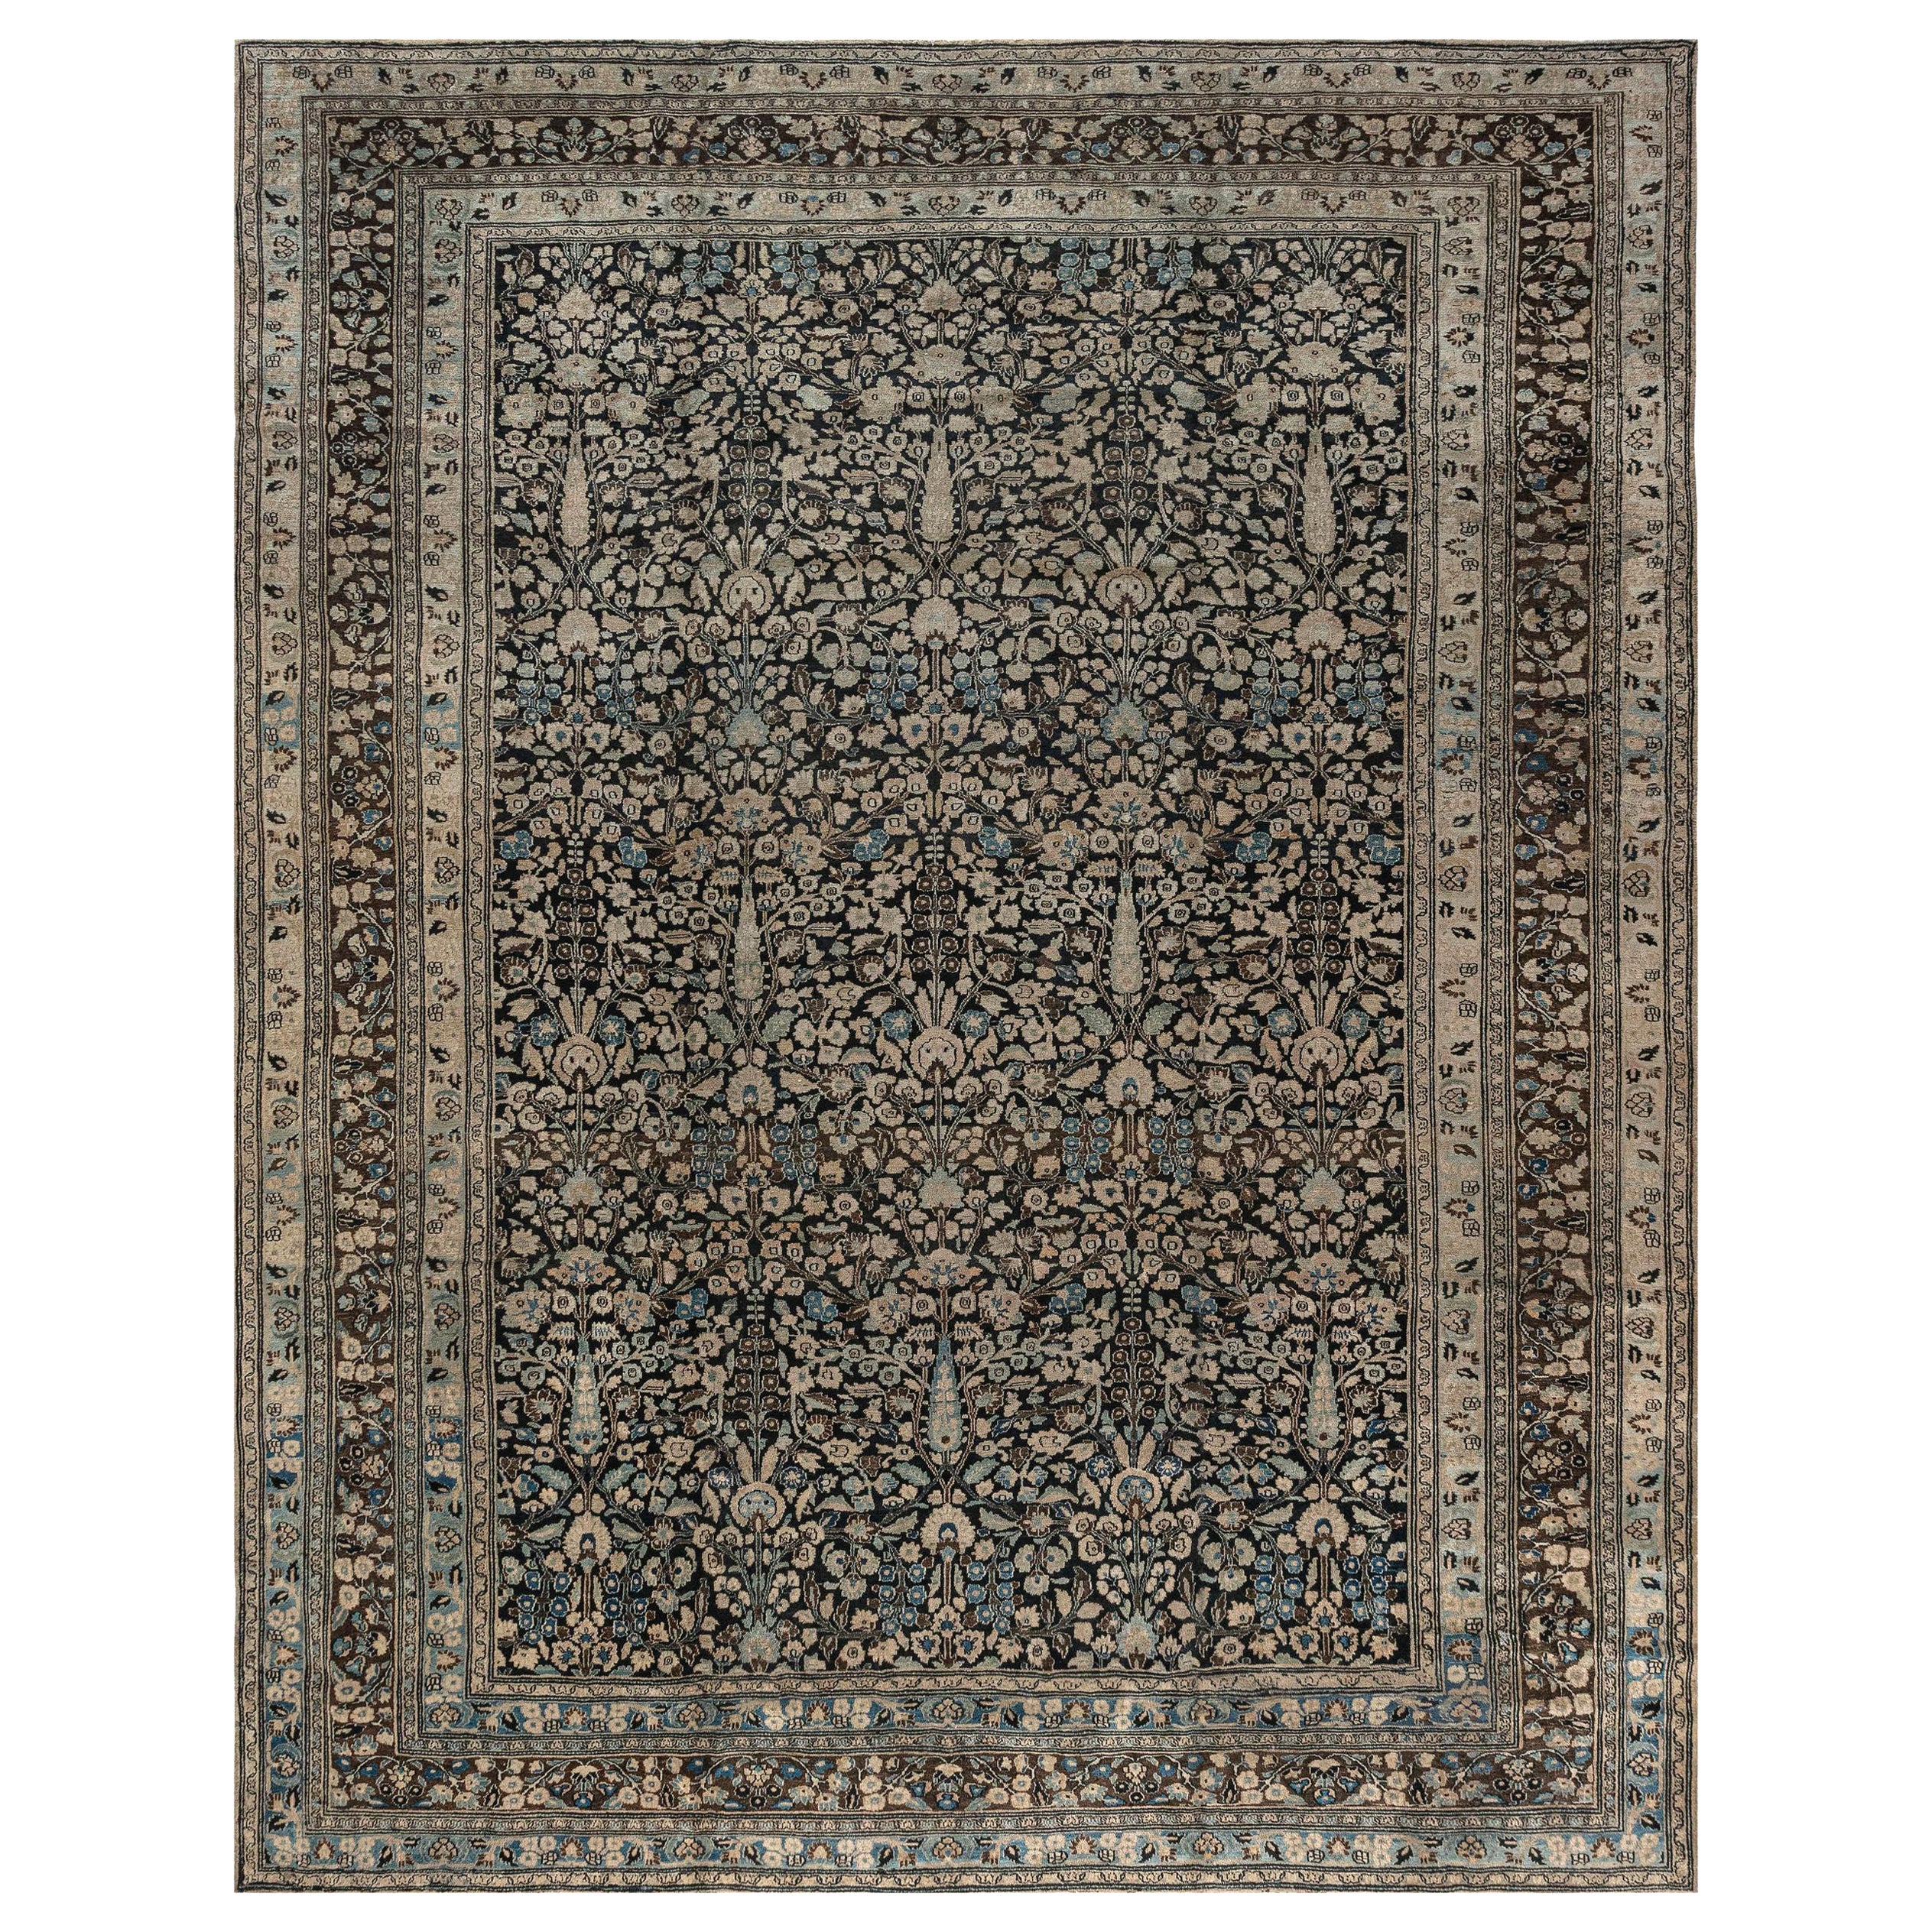 Authentic 19th Century Persian Meshad Carpet For Sale